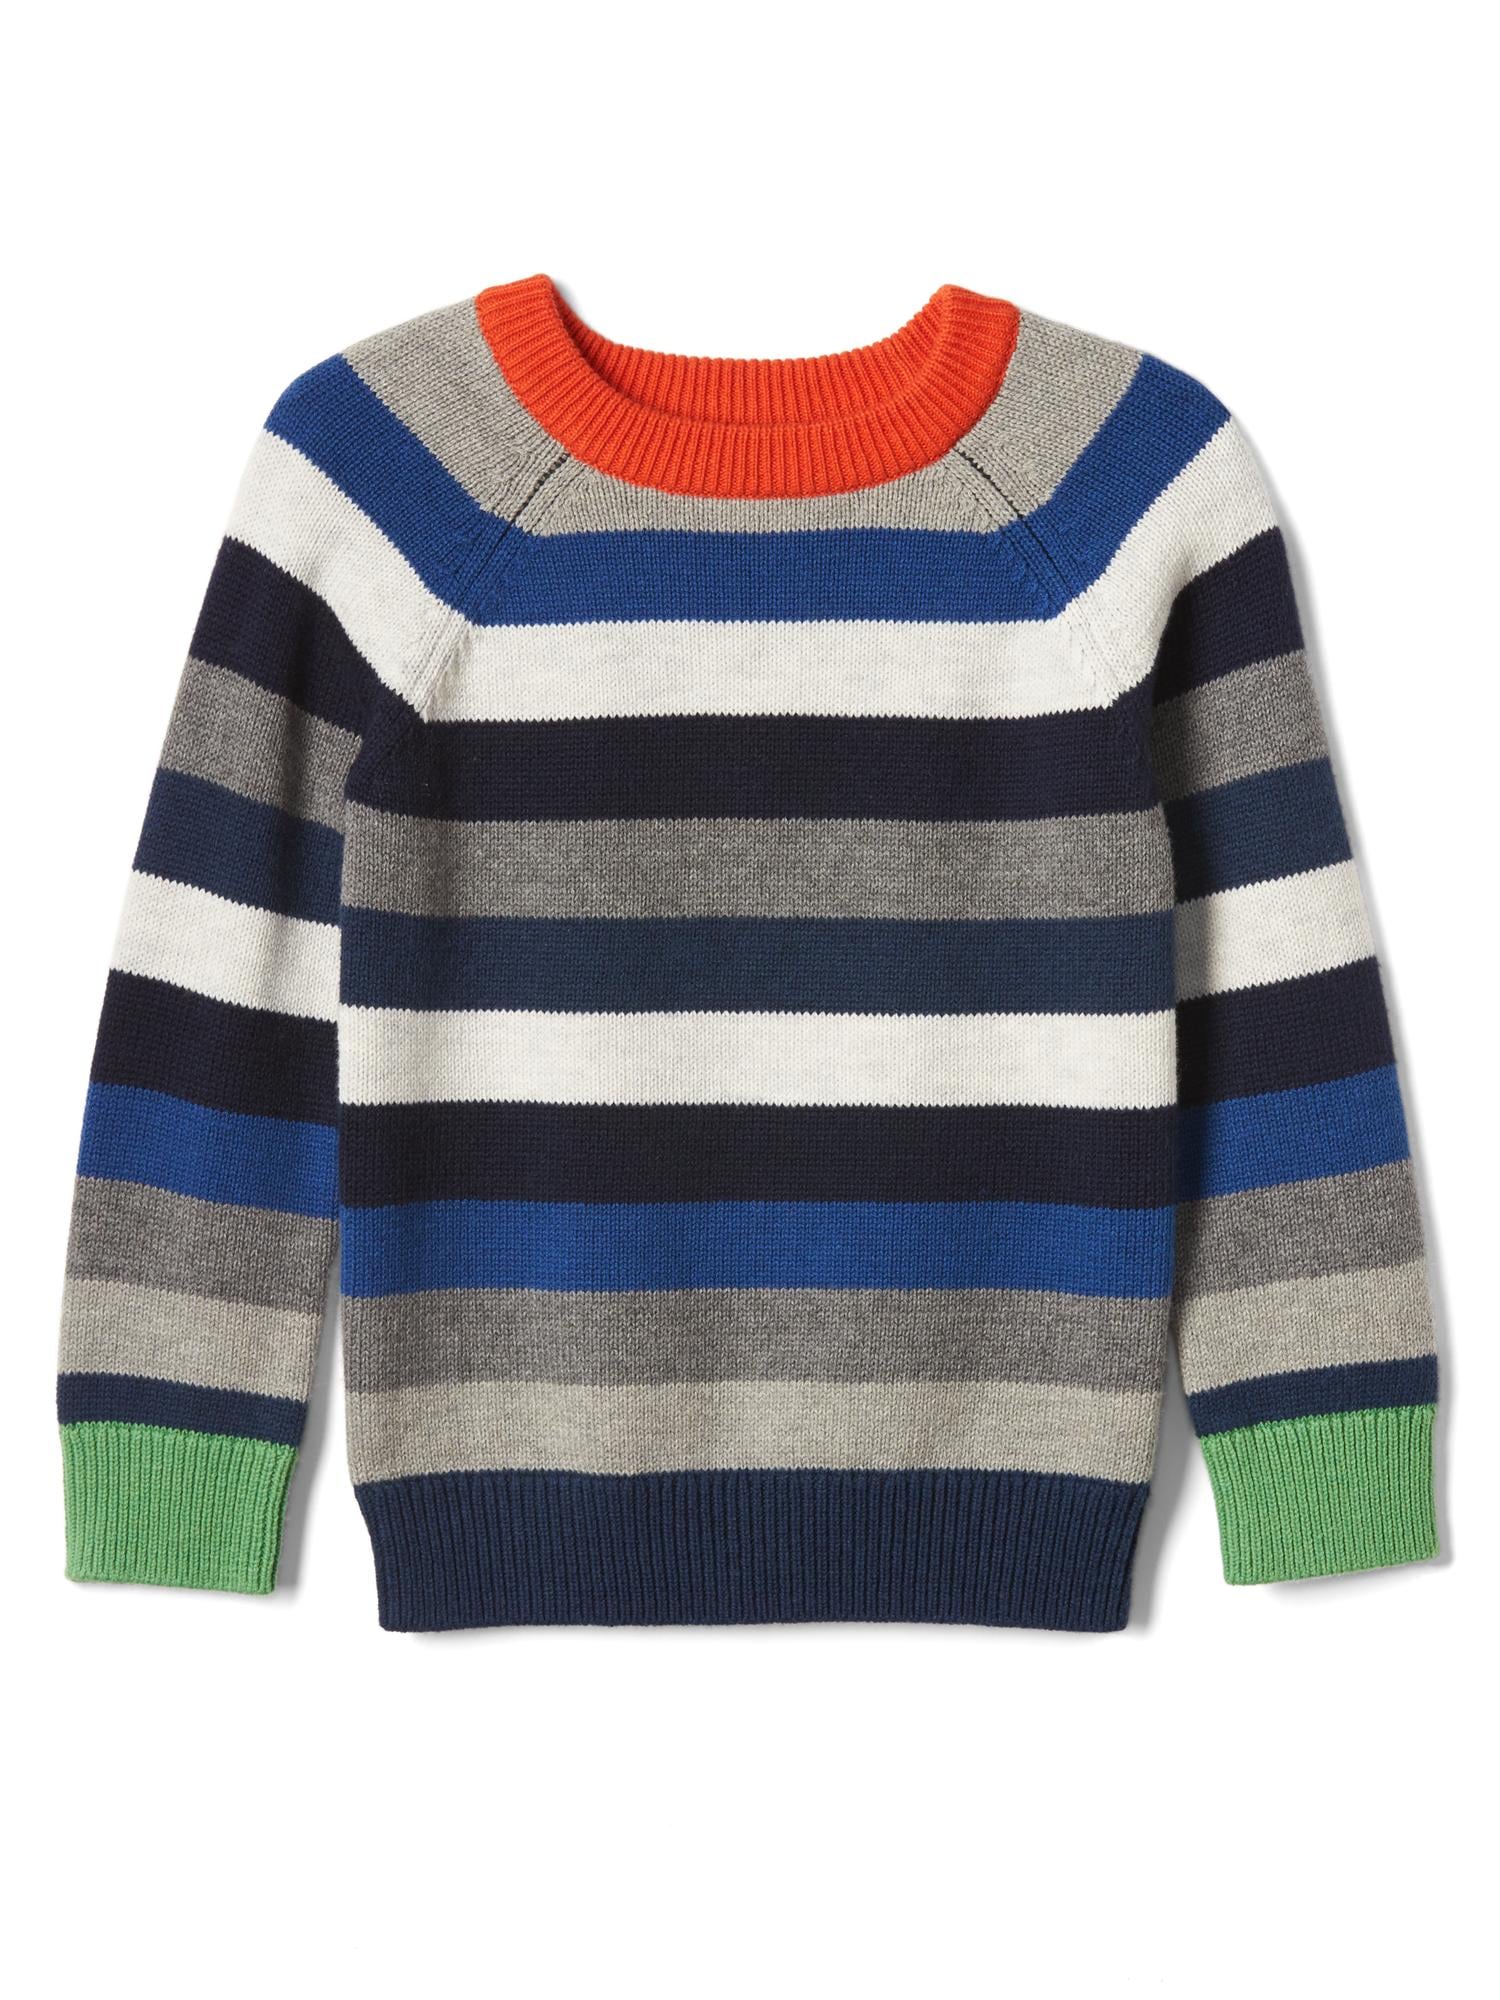 Gap Kids NWT Gray Crazy Stripe Sweater Leggings L 10 XL 12 XXL 14-16 $40